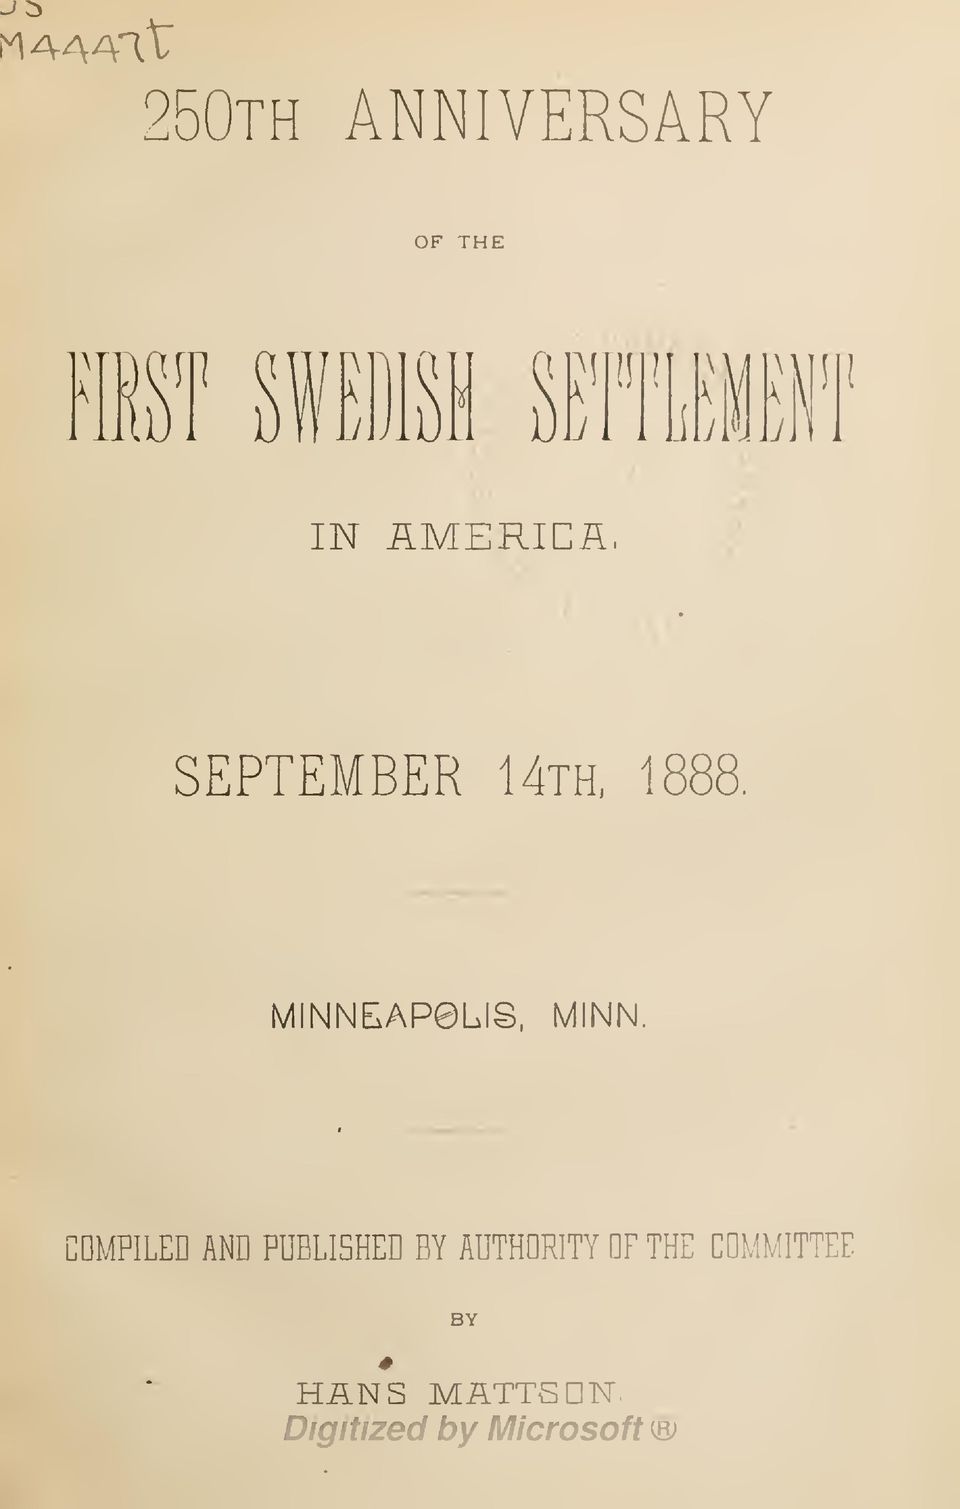 IN AMERICA, SEPTEMBER 14m 1888.